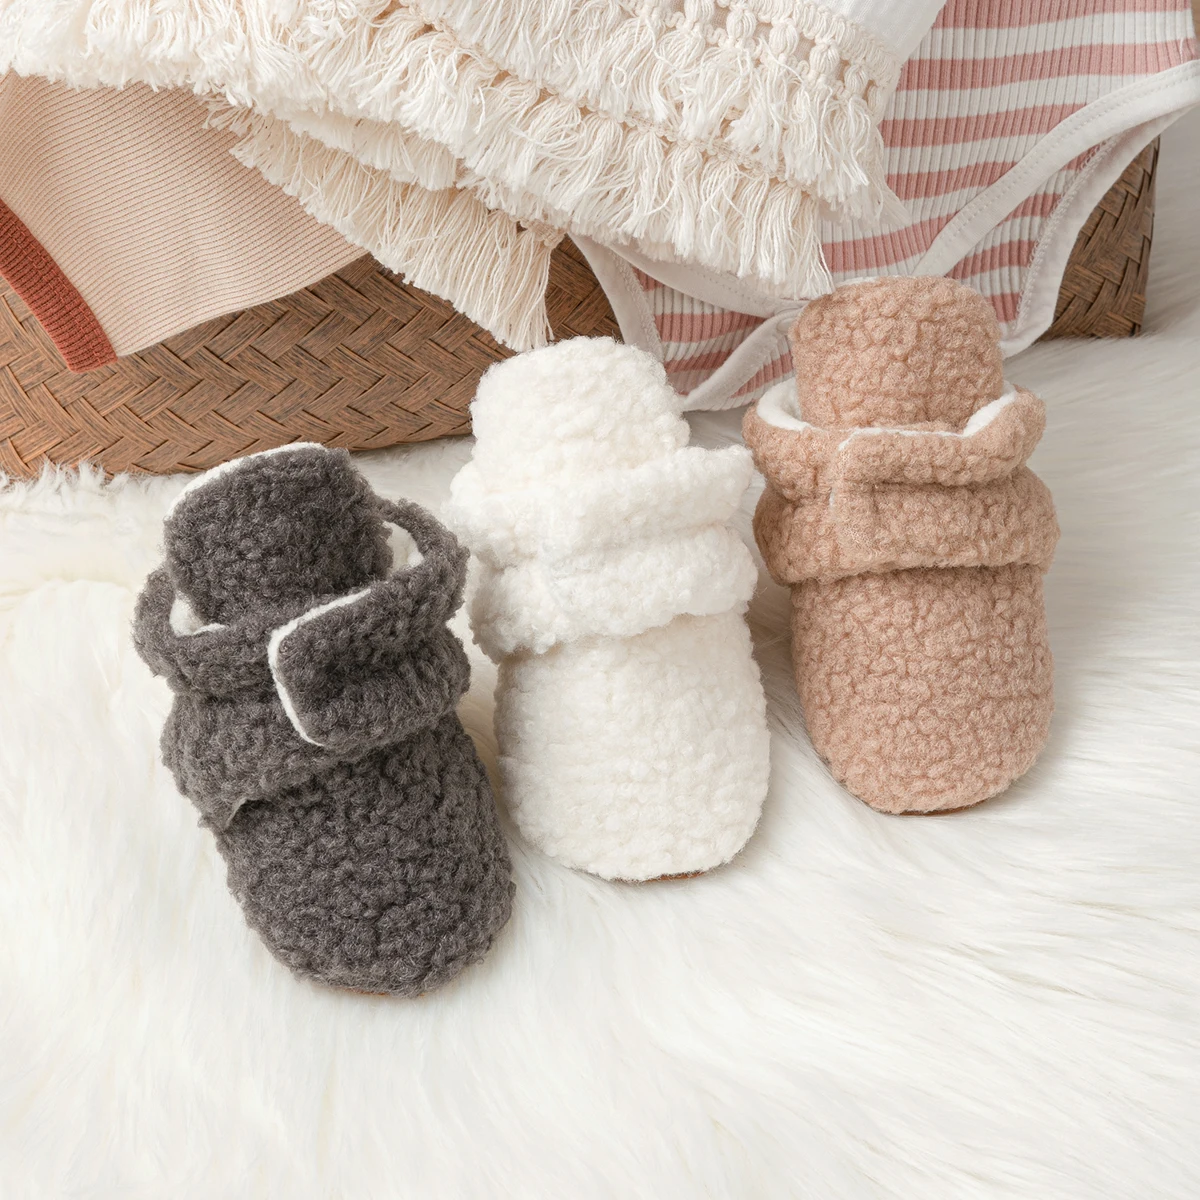 Customization Newborn Walking Cribs Socks Warm Winter Non Slip Infant Boy Girl Soft Sole Warm Fleece Baby Booties